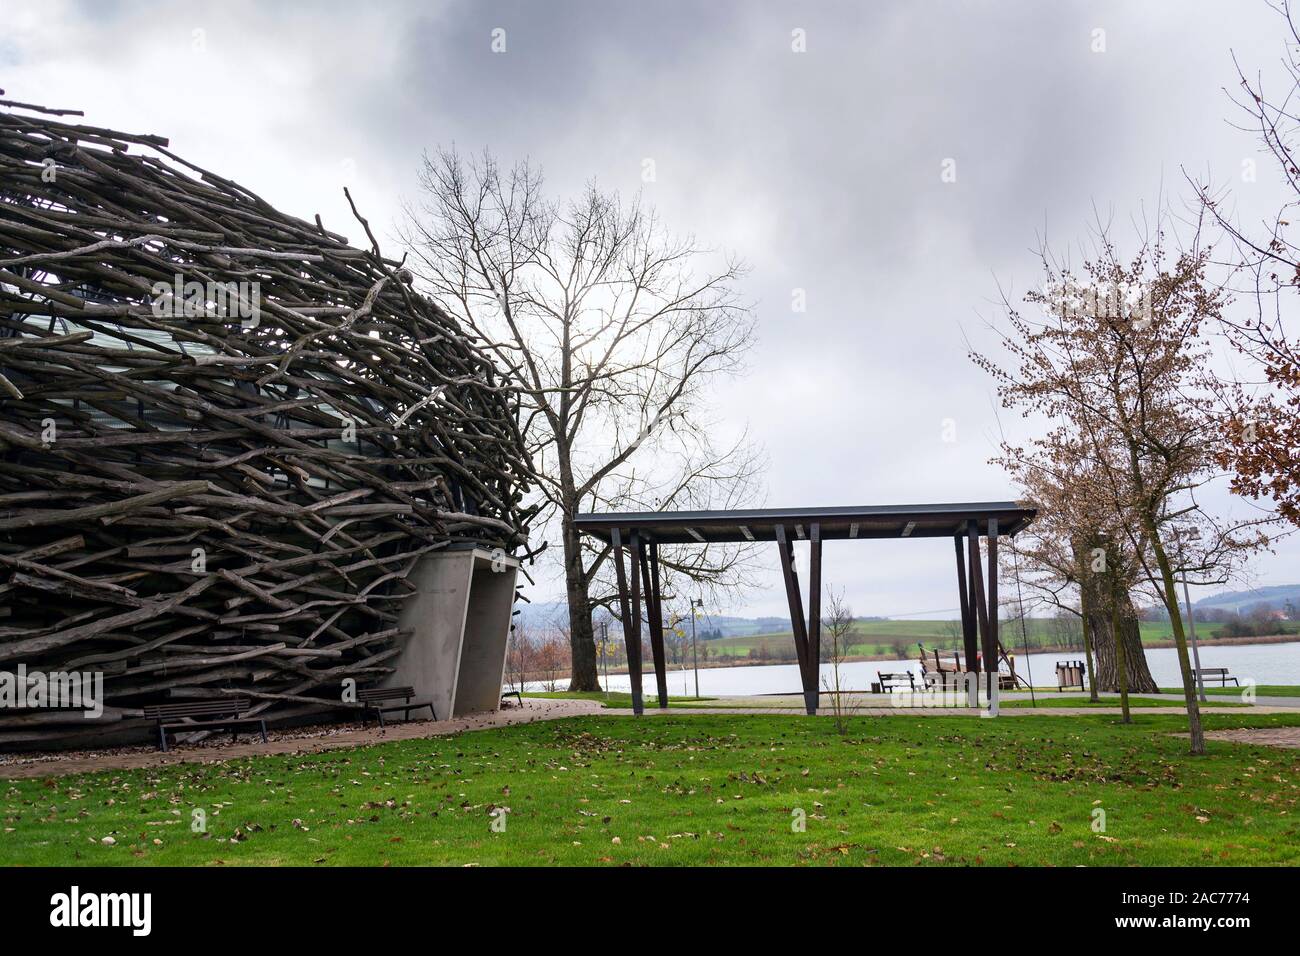 OLBRAMOVICE, CZECH REPUBLIC - NOVEMBER 23 2019: Storks Nest riding arena covered with wood resembling a giant birds nest on November 23, 2019 Stock Photo